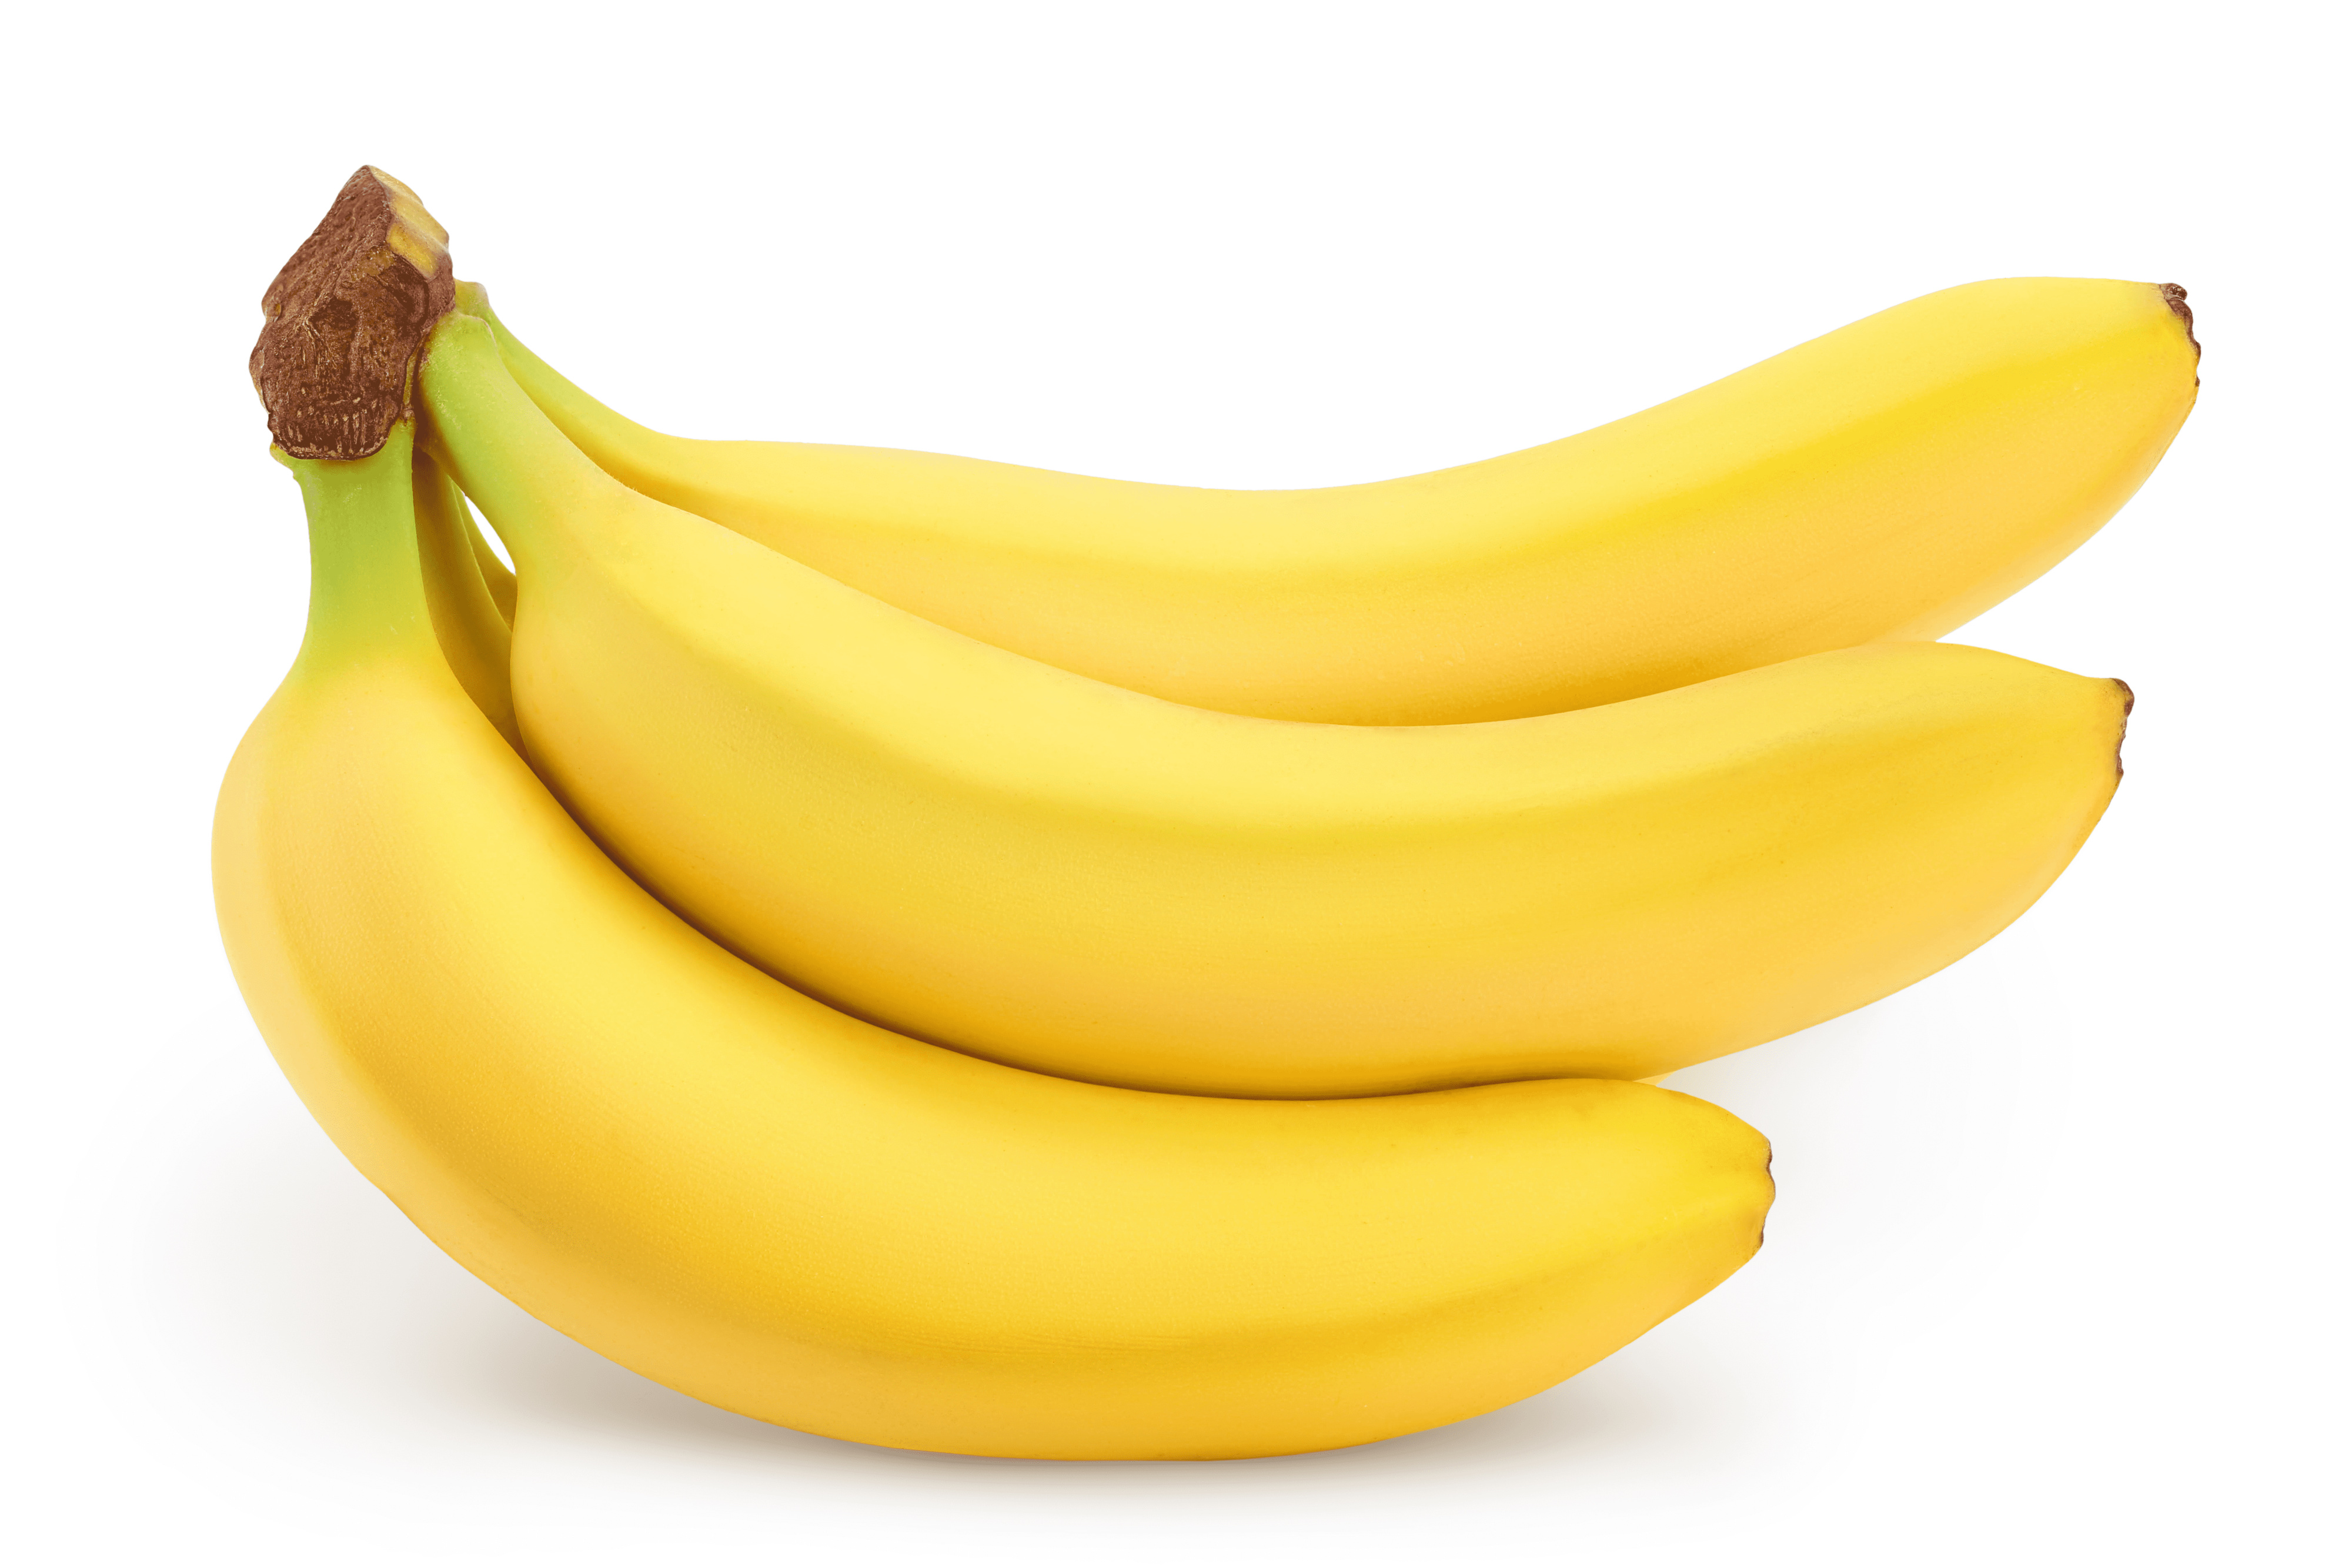 Banana 1kg - Colombia